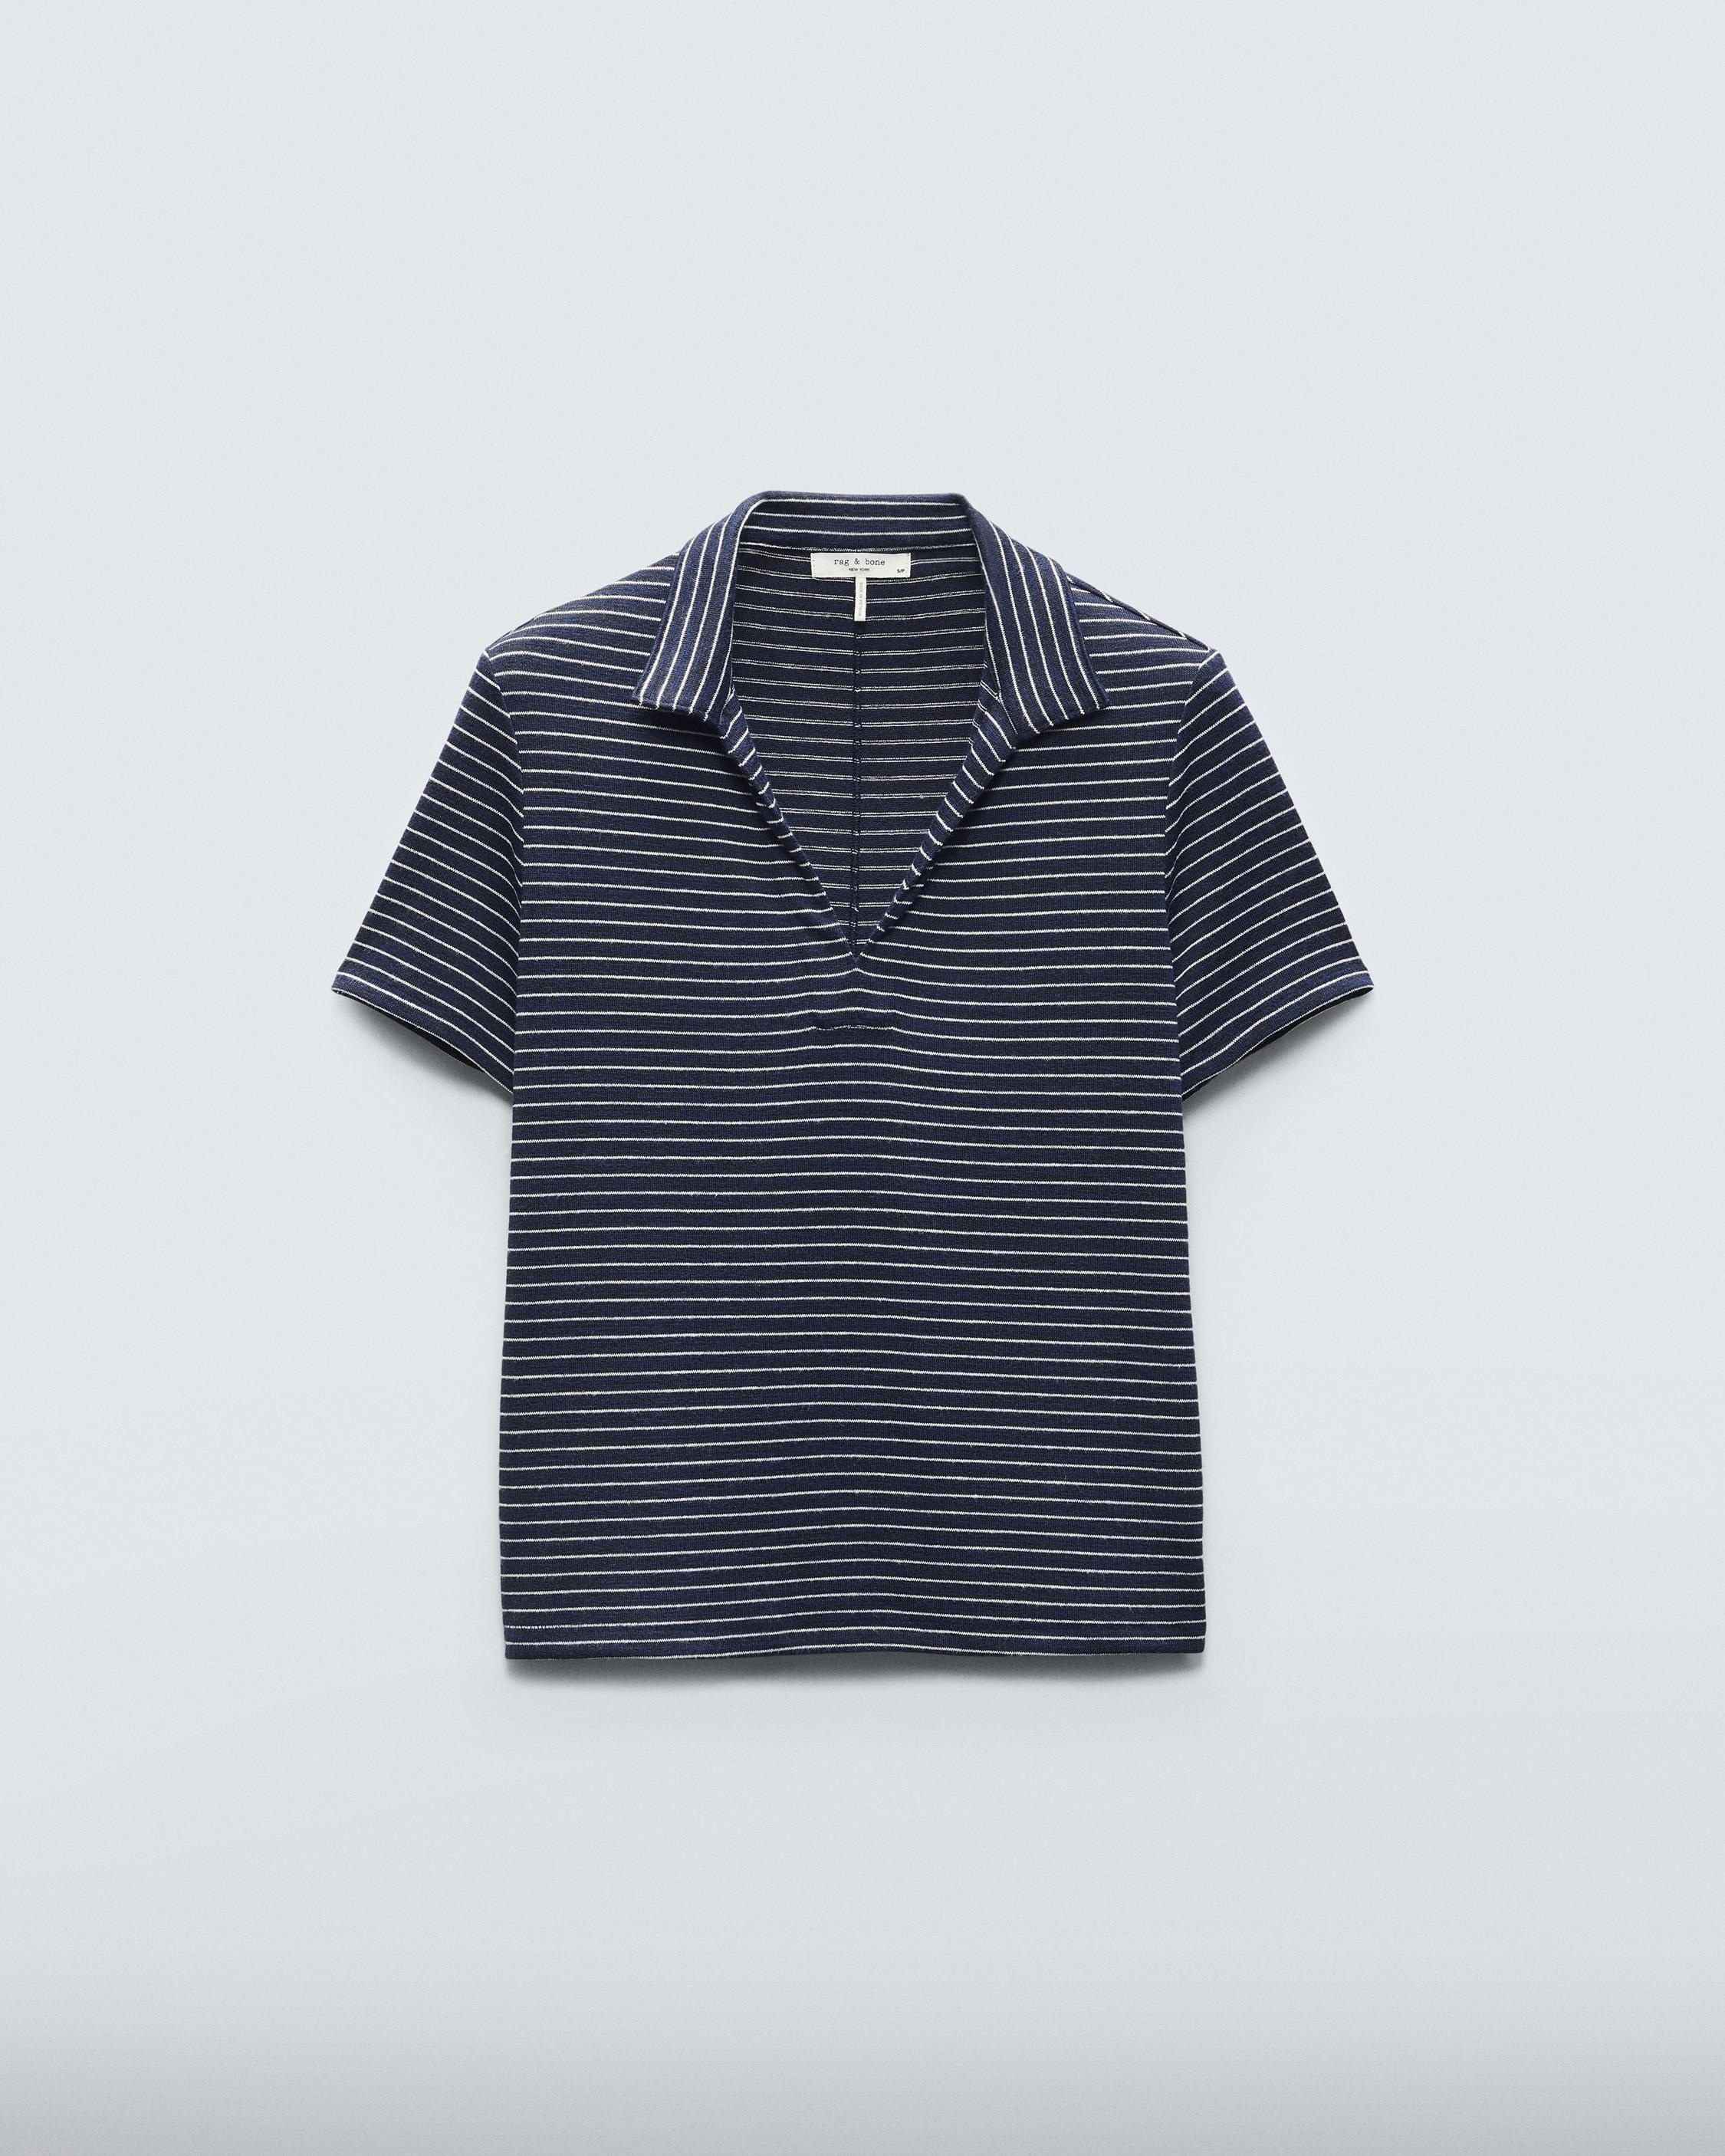 The Knit Striped Polo
Pima Cotton T-Shirt - 1